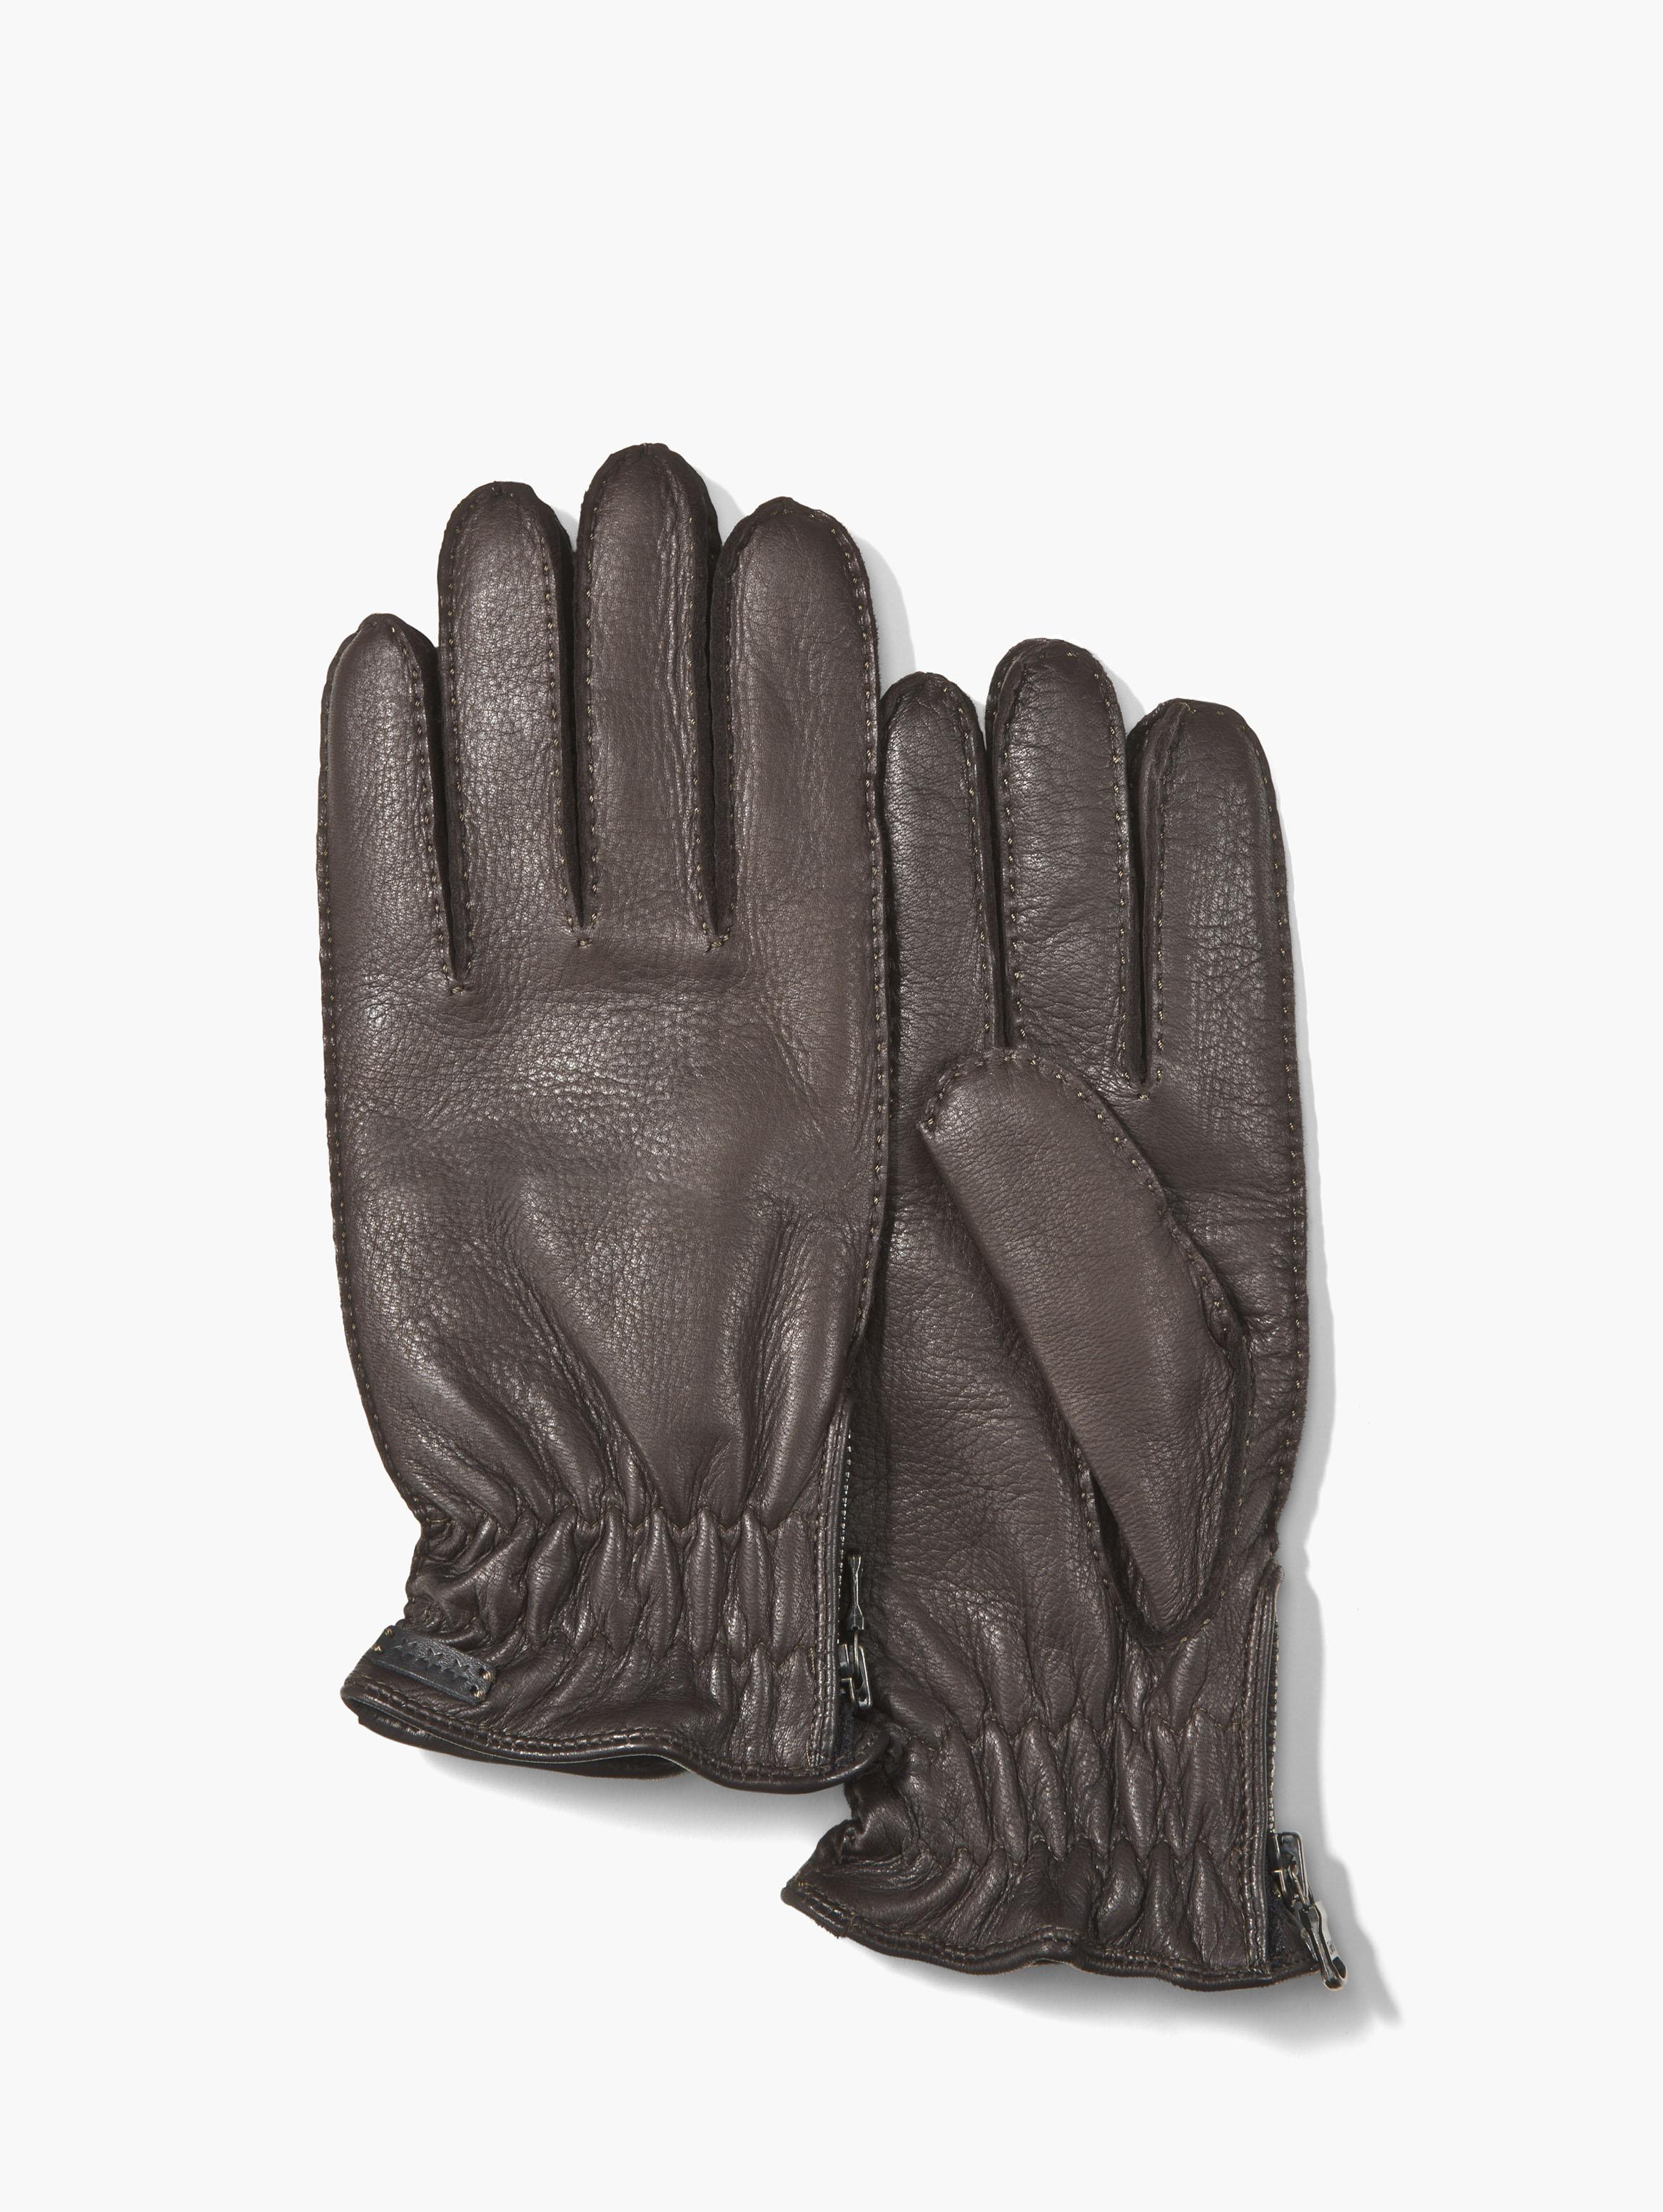 John Varvatos Men's Gloves at MenStyleUSA.com